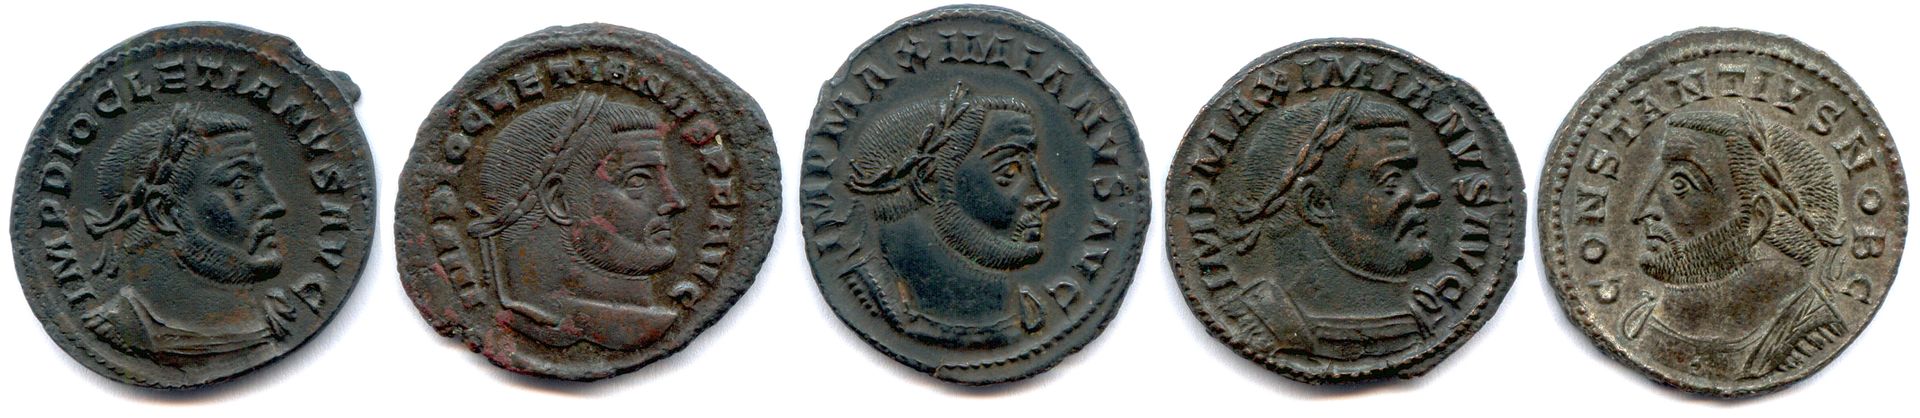 Null ROMAN EMPIRE 

Five roman bronze coins (Folles): 

Diocletian, Maximian Her&hellip;